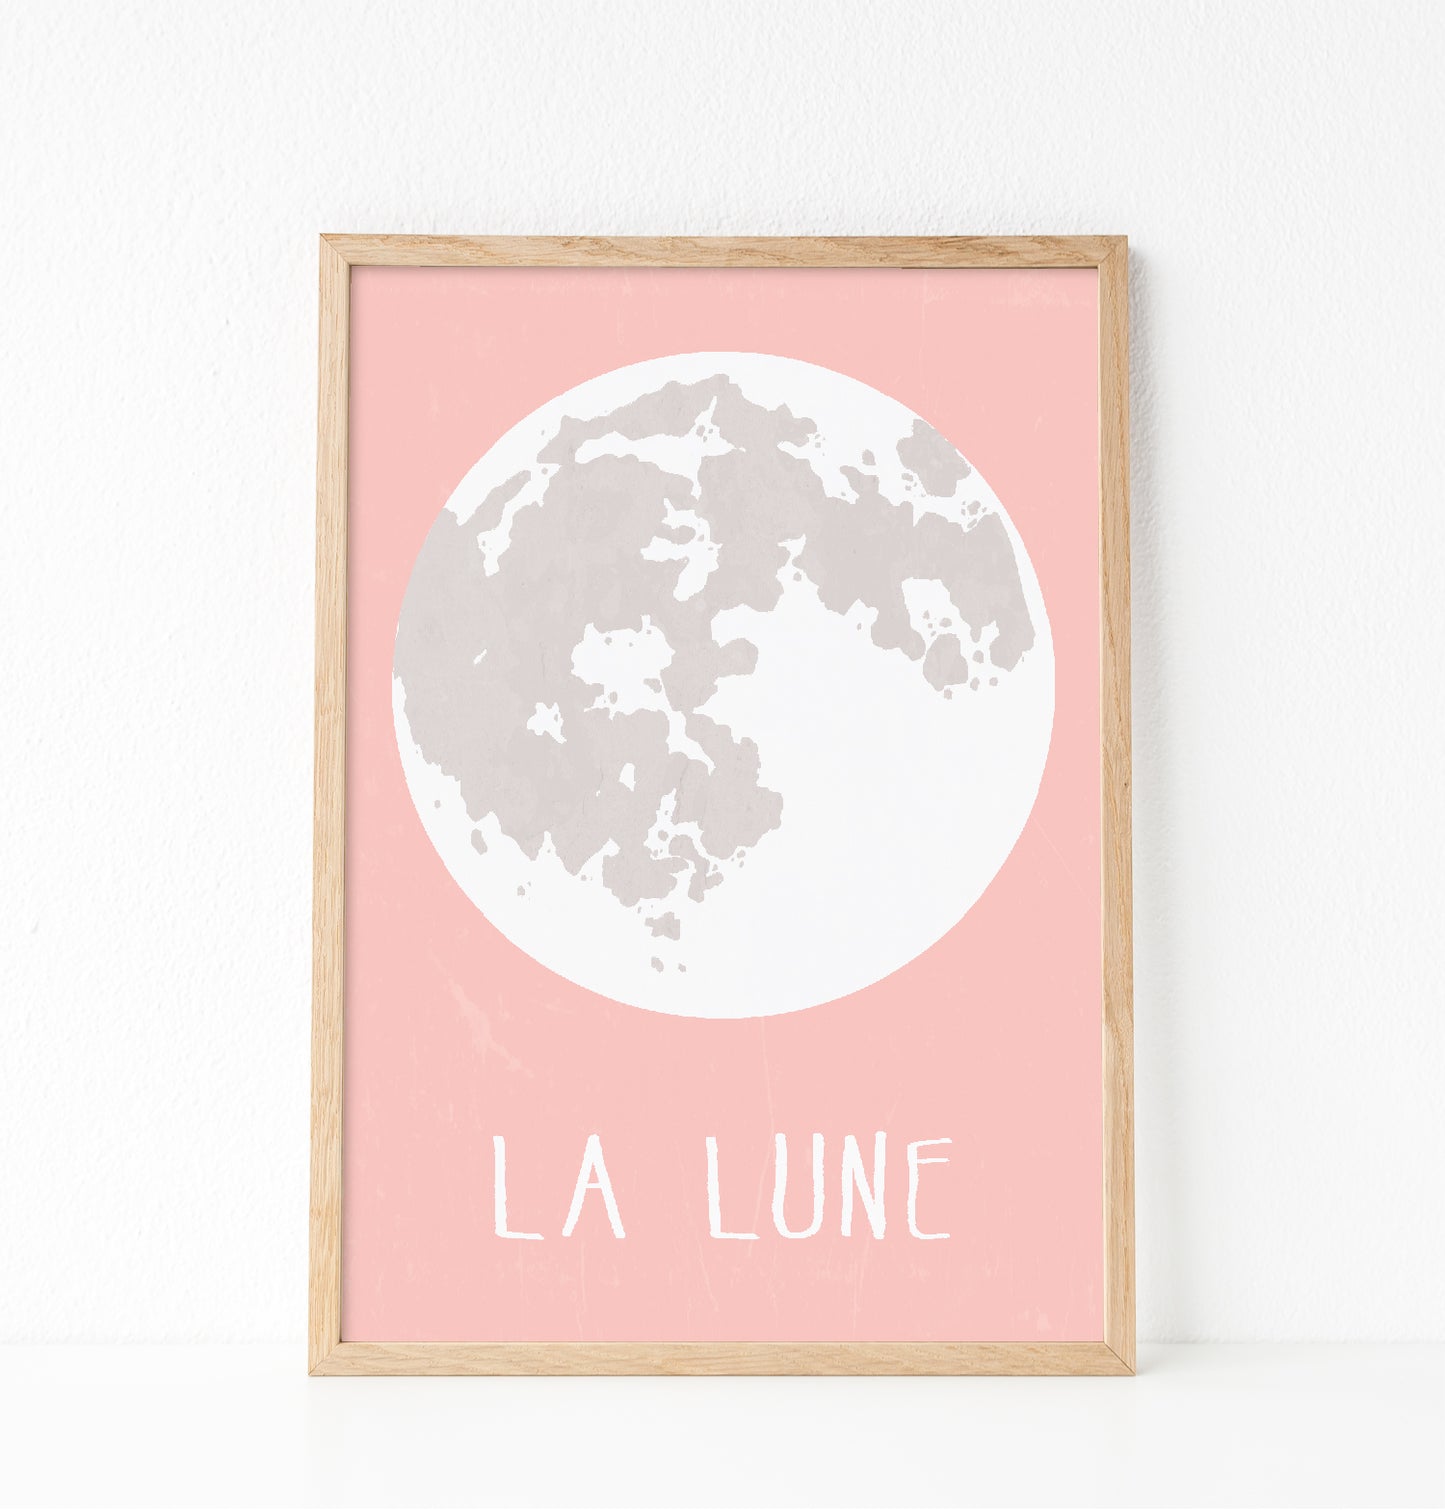 La Lune print in pink